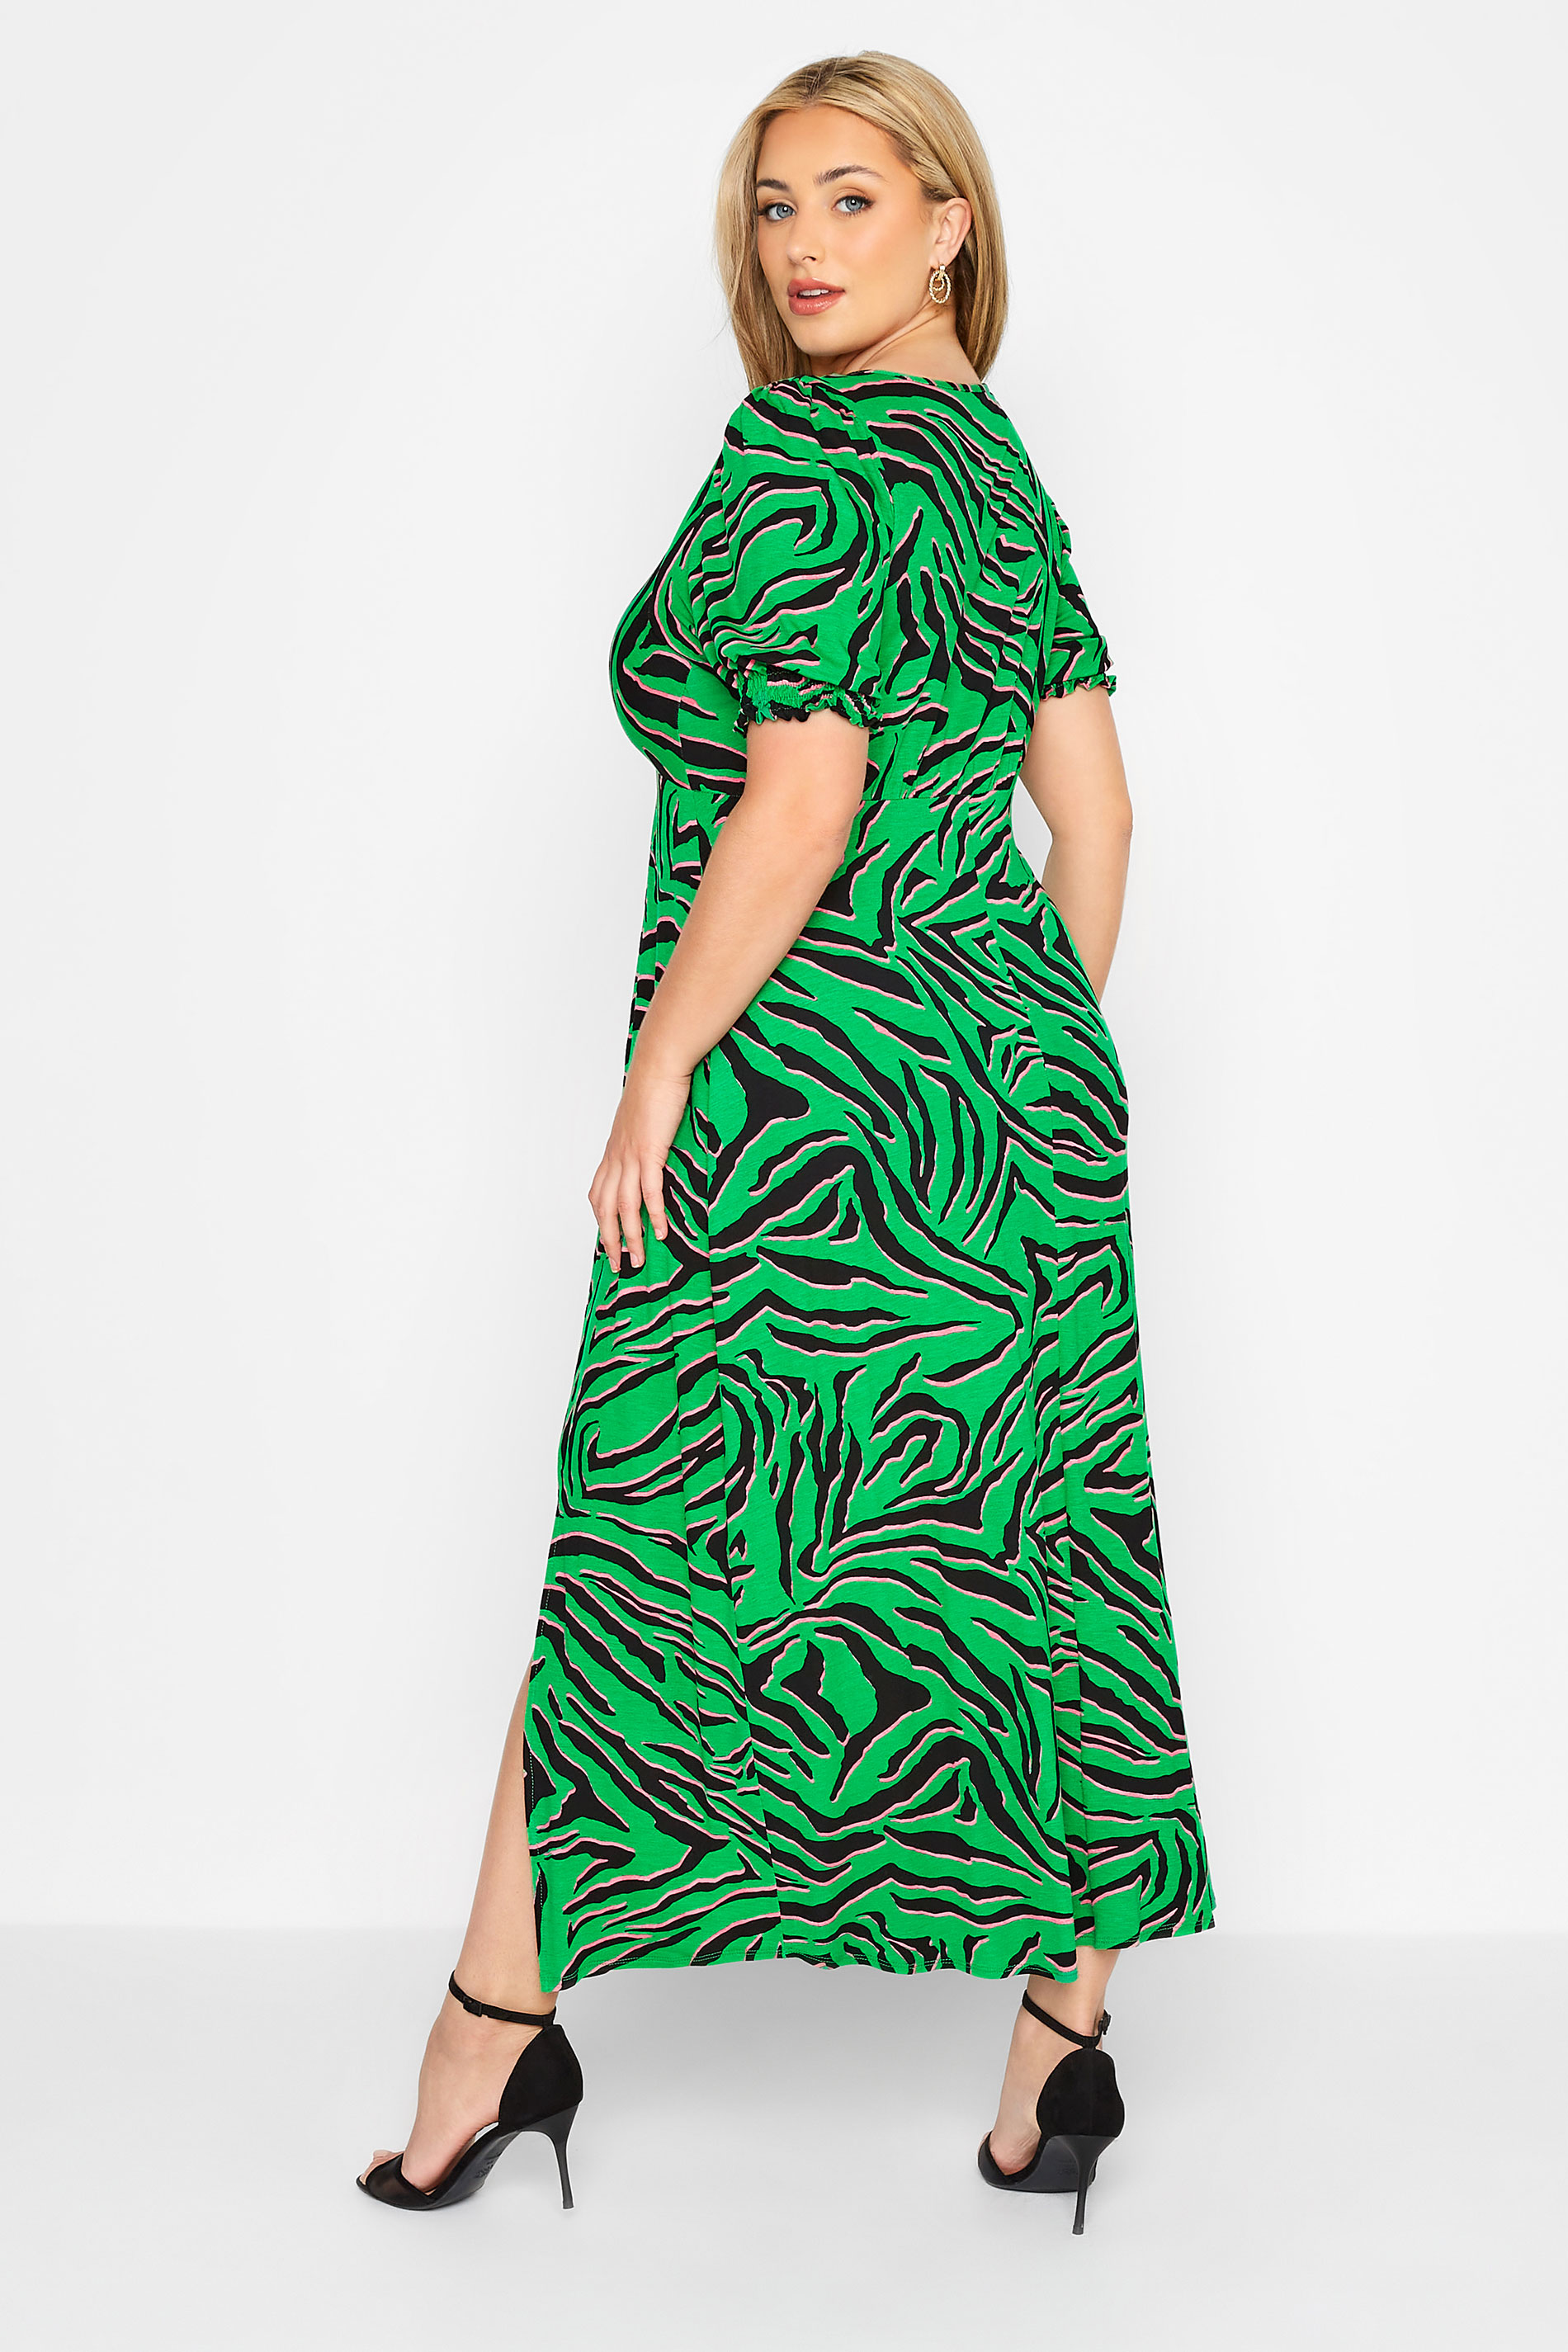 YOURS LONDON Plus Size Green Zebra Print Keyhole Dress | Yours Clothing 3